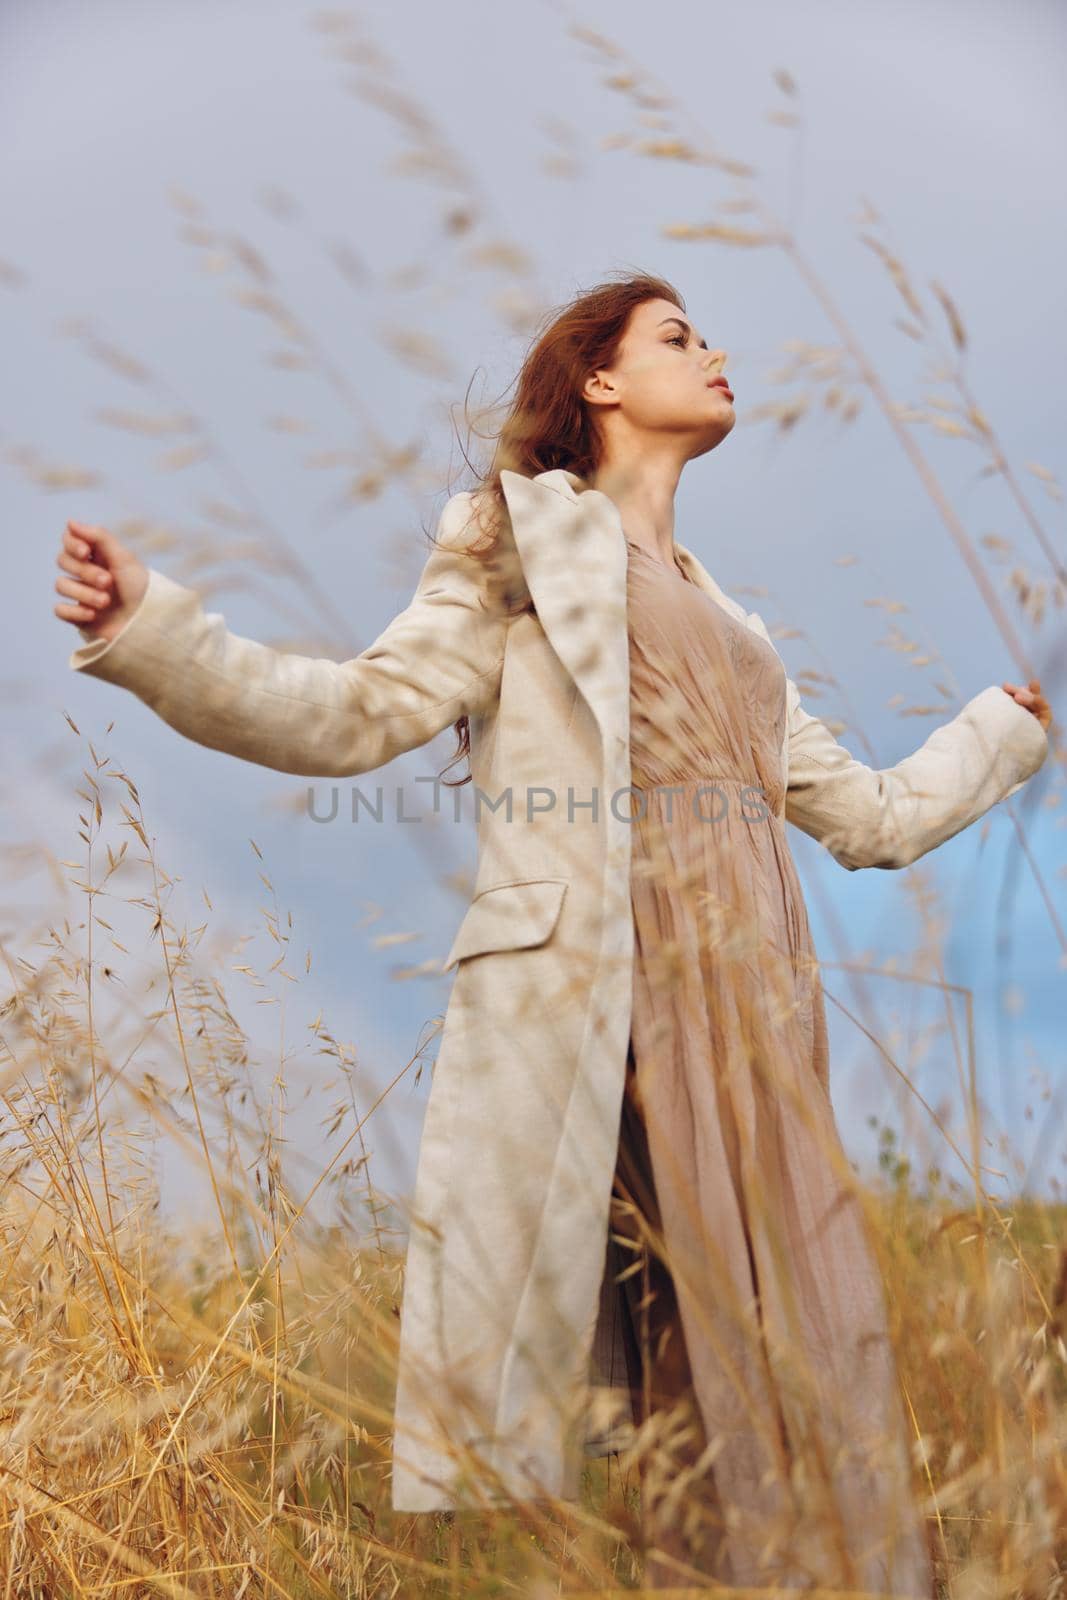 beautiful woman walk in the field autumn season concept. High quality photo